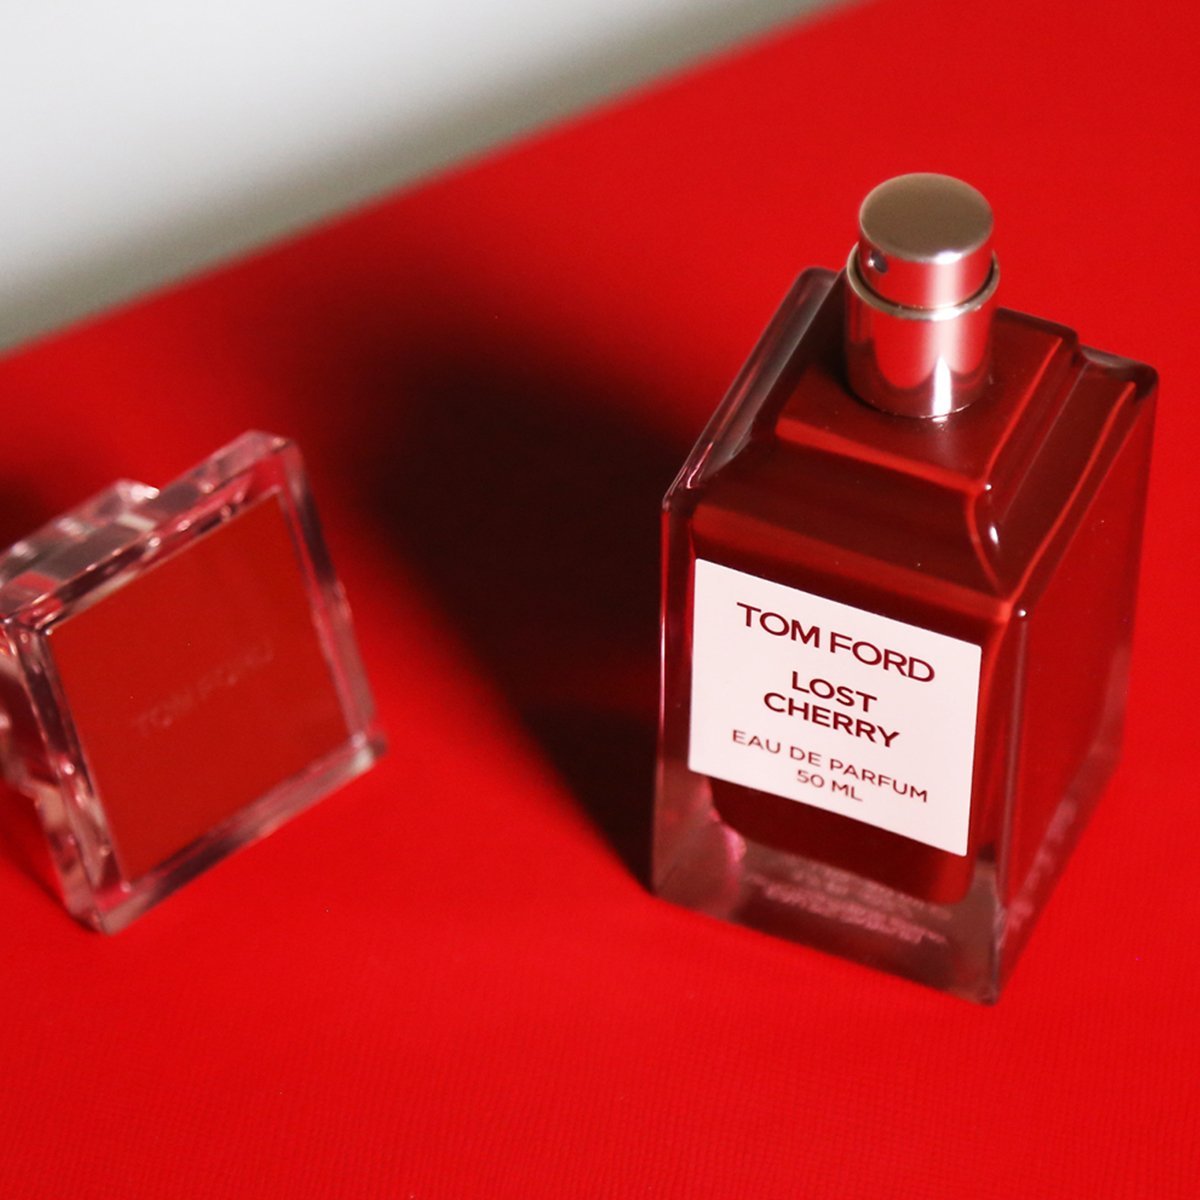 Tom Ford Lost Cherry EDP - My Perfume Shop Australia